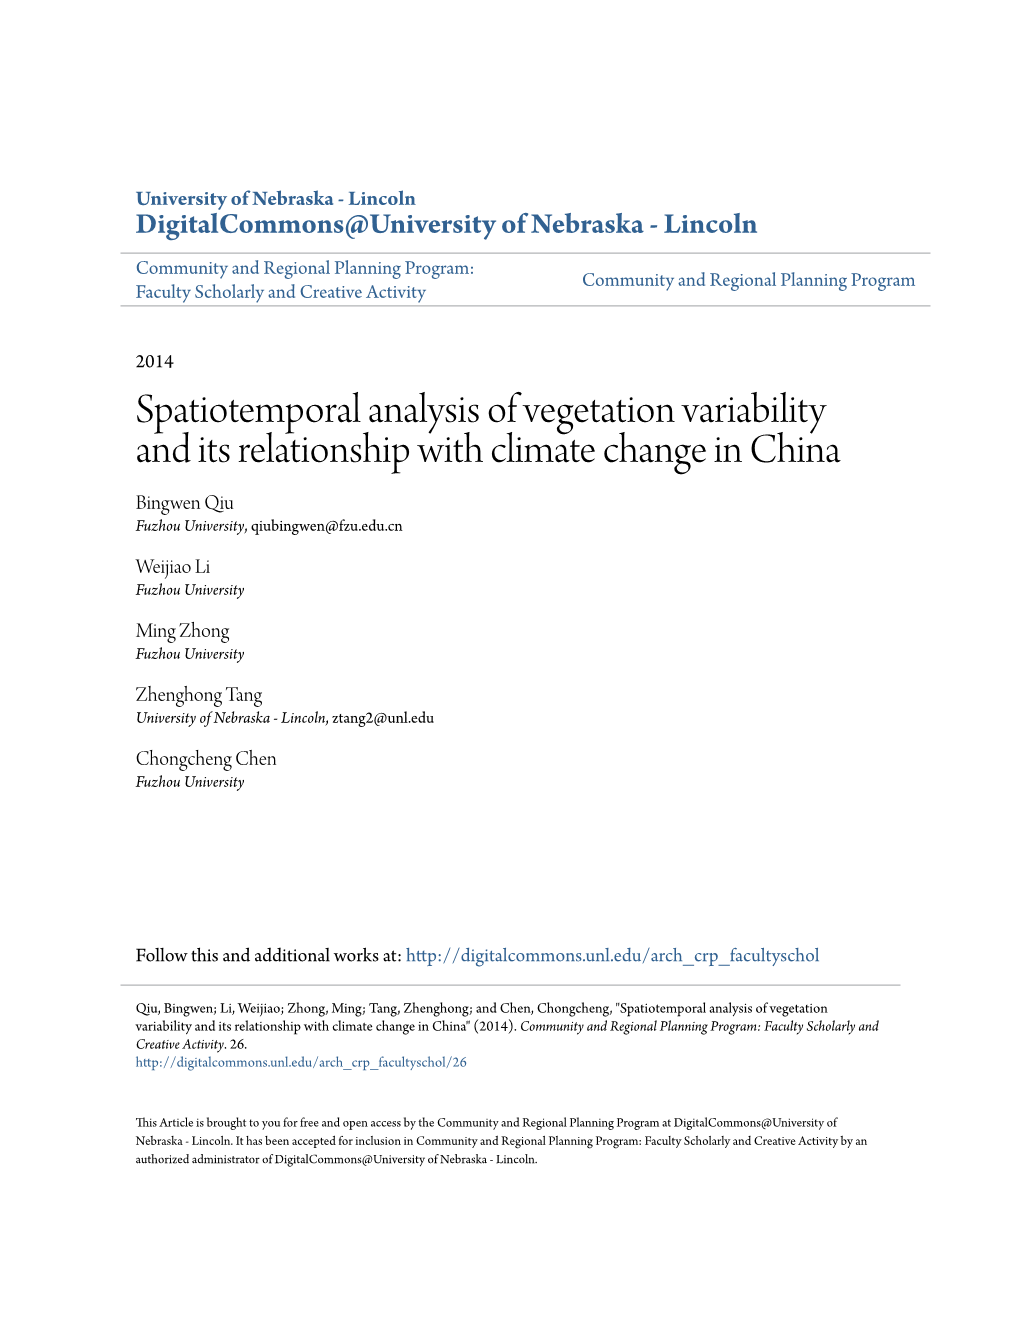 Spatiotemporal Analysis of Vegetation Variability and Its Relationship with Climate Change in China Bingwen Qiu Fuzhou University, Qiubingwen@Fzu.Edu.Cn